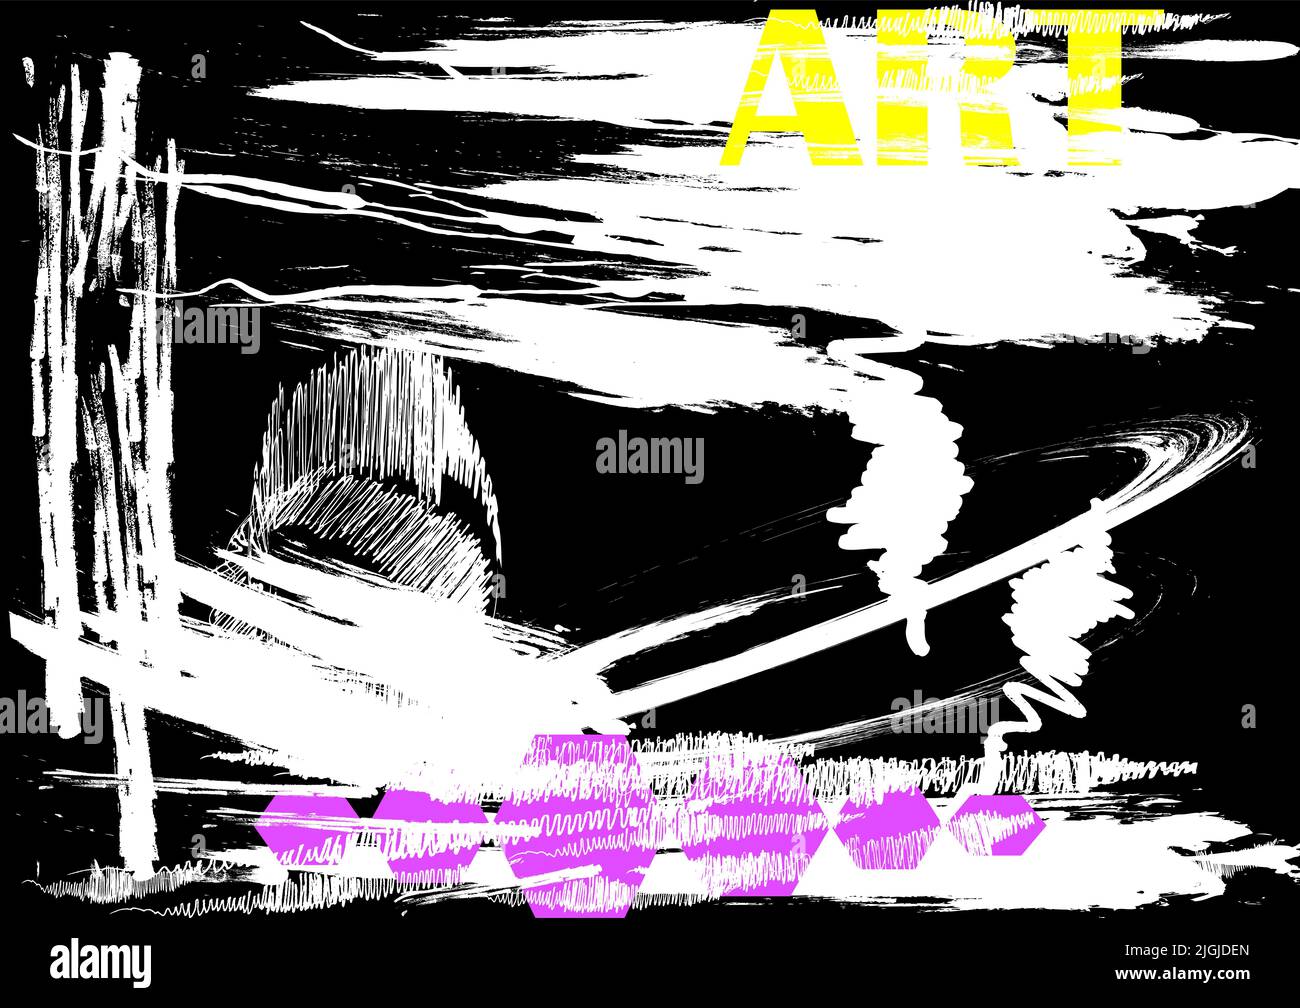 Abstrakt Hintergrund Grunge Aquarell malen Poster Hintergrund Splash Art Grafik Design Muster Vektor Illustration Stock Vektor